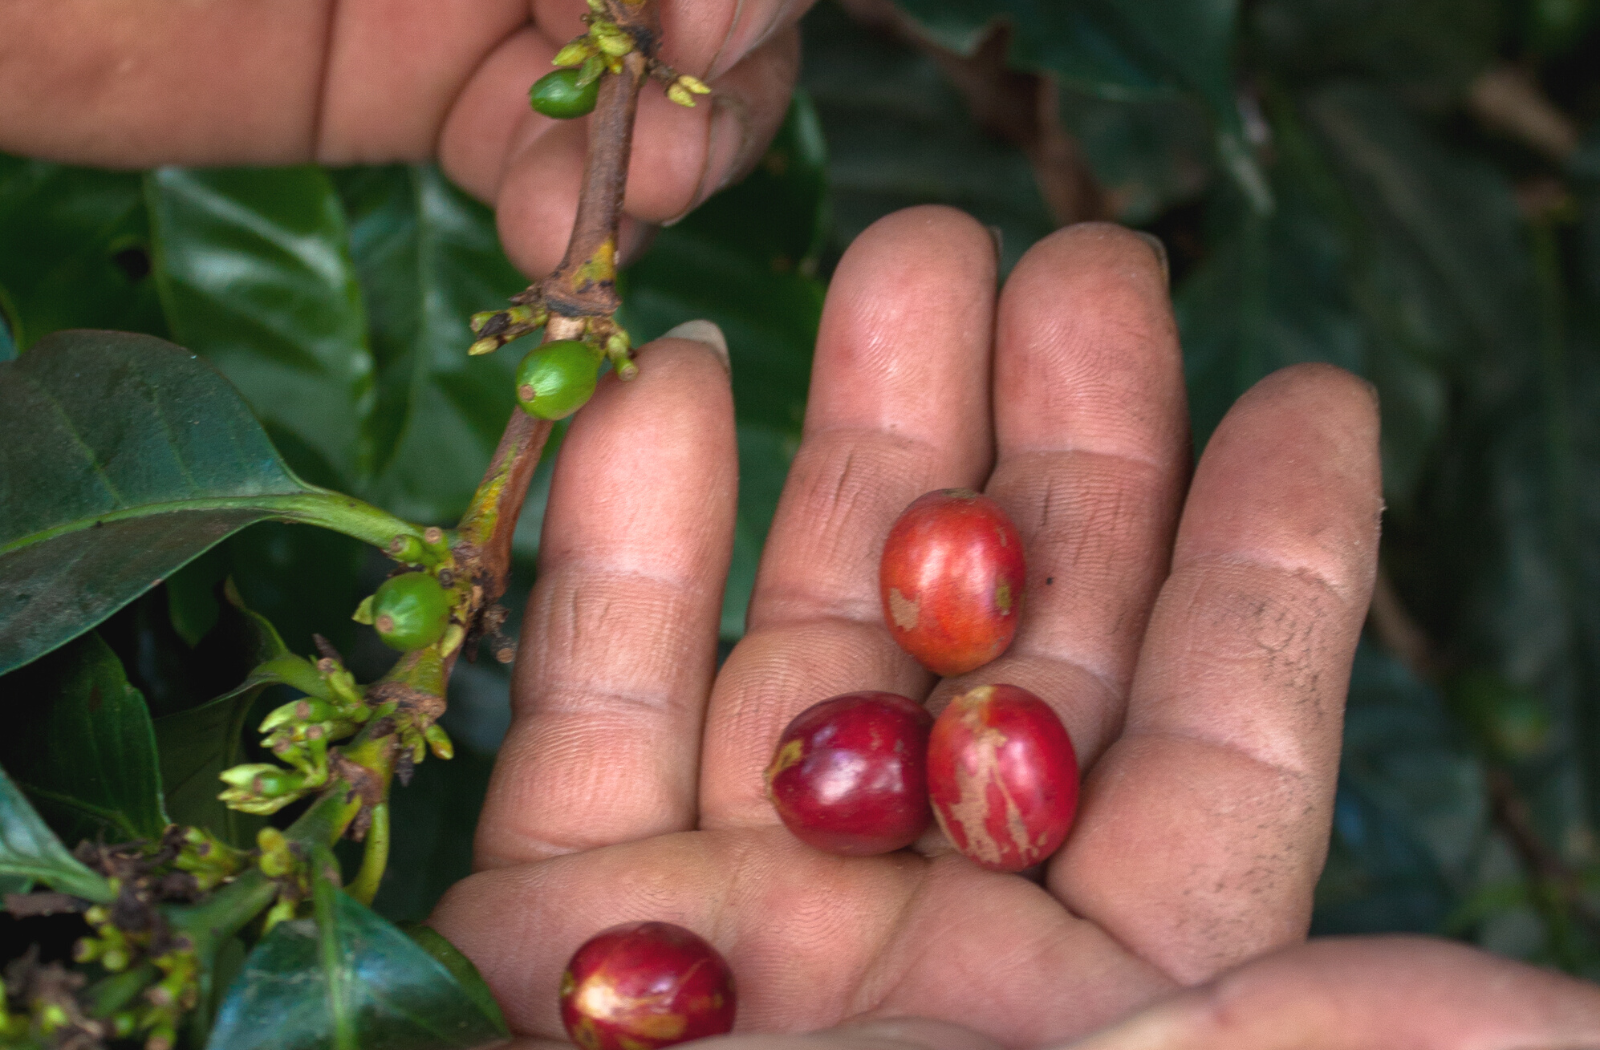 Coffee harvesting in Guatemala